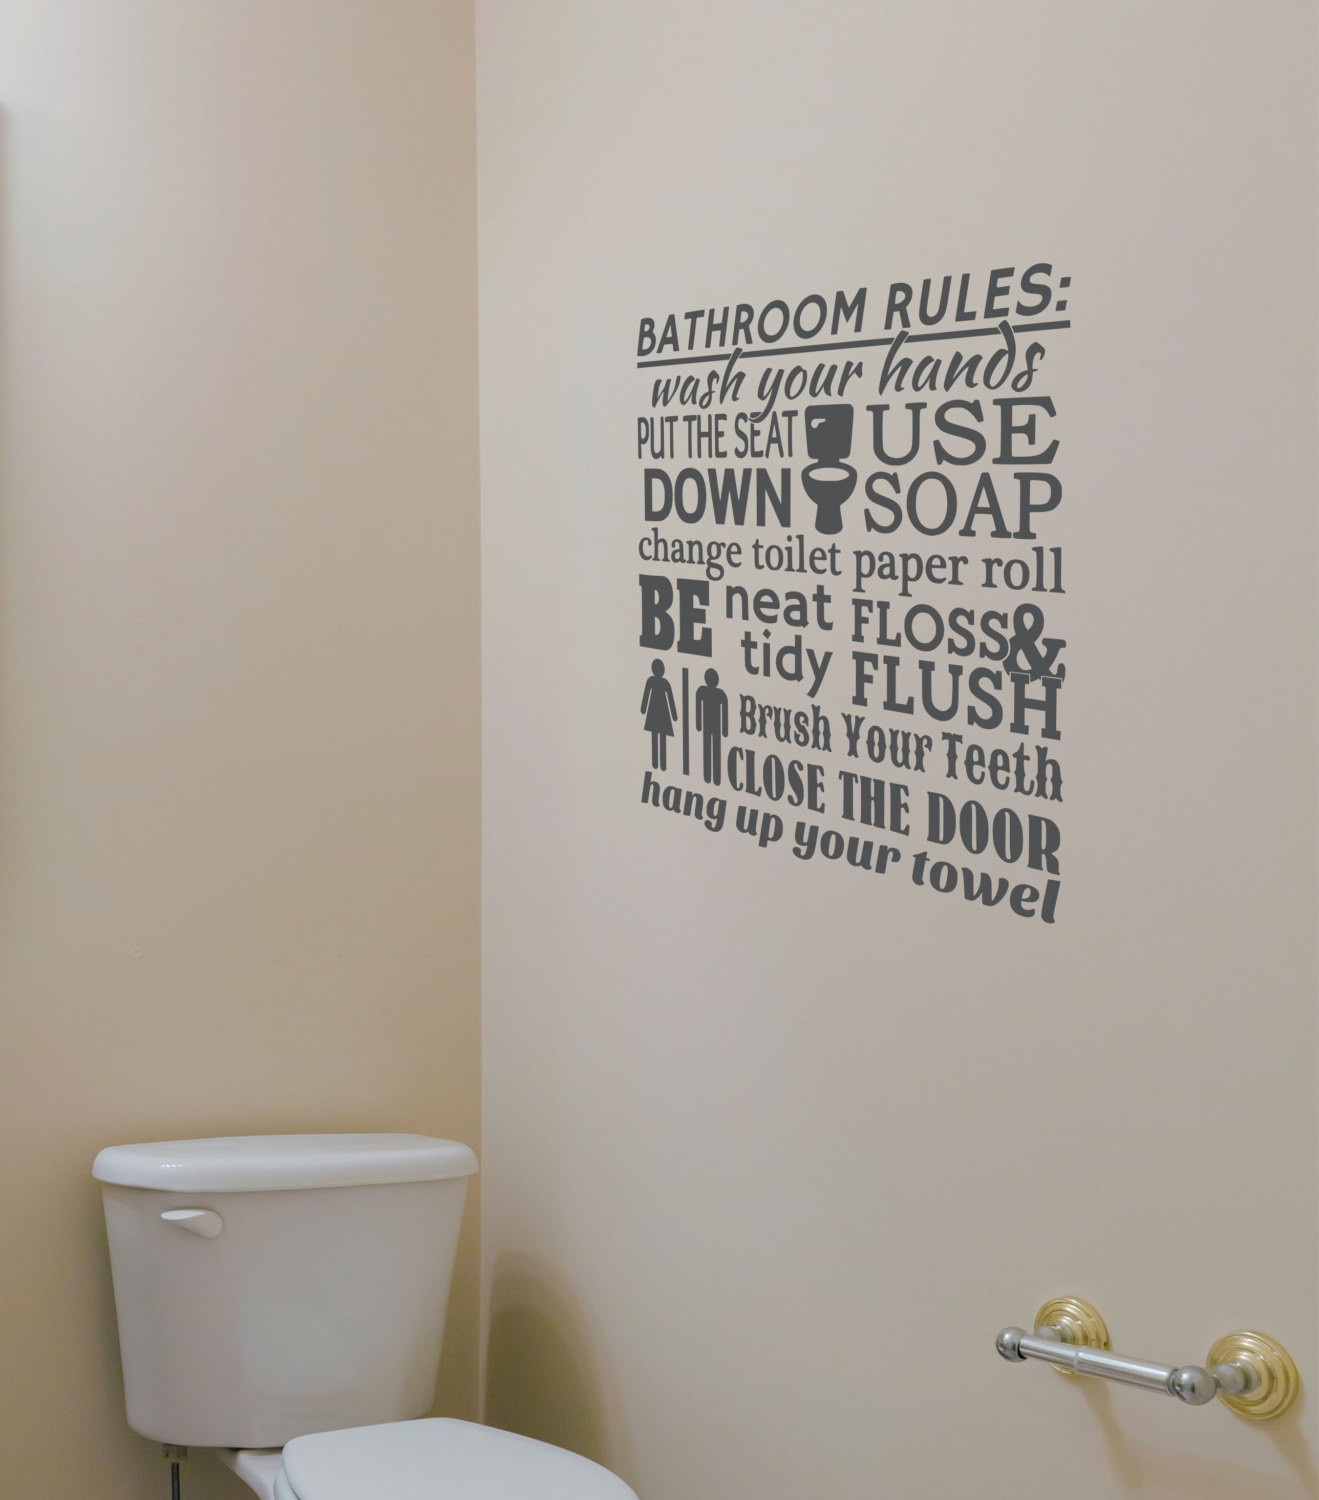 Bathroom Rules Wall Decals
 Bathroom Rules Wall Decal Sticker